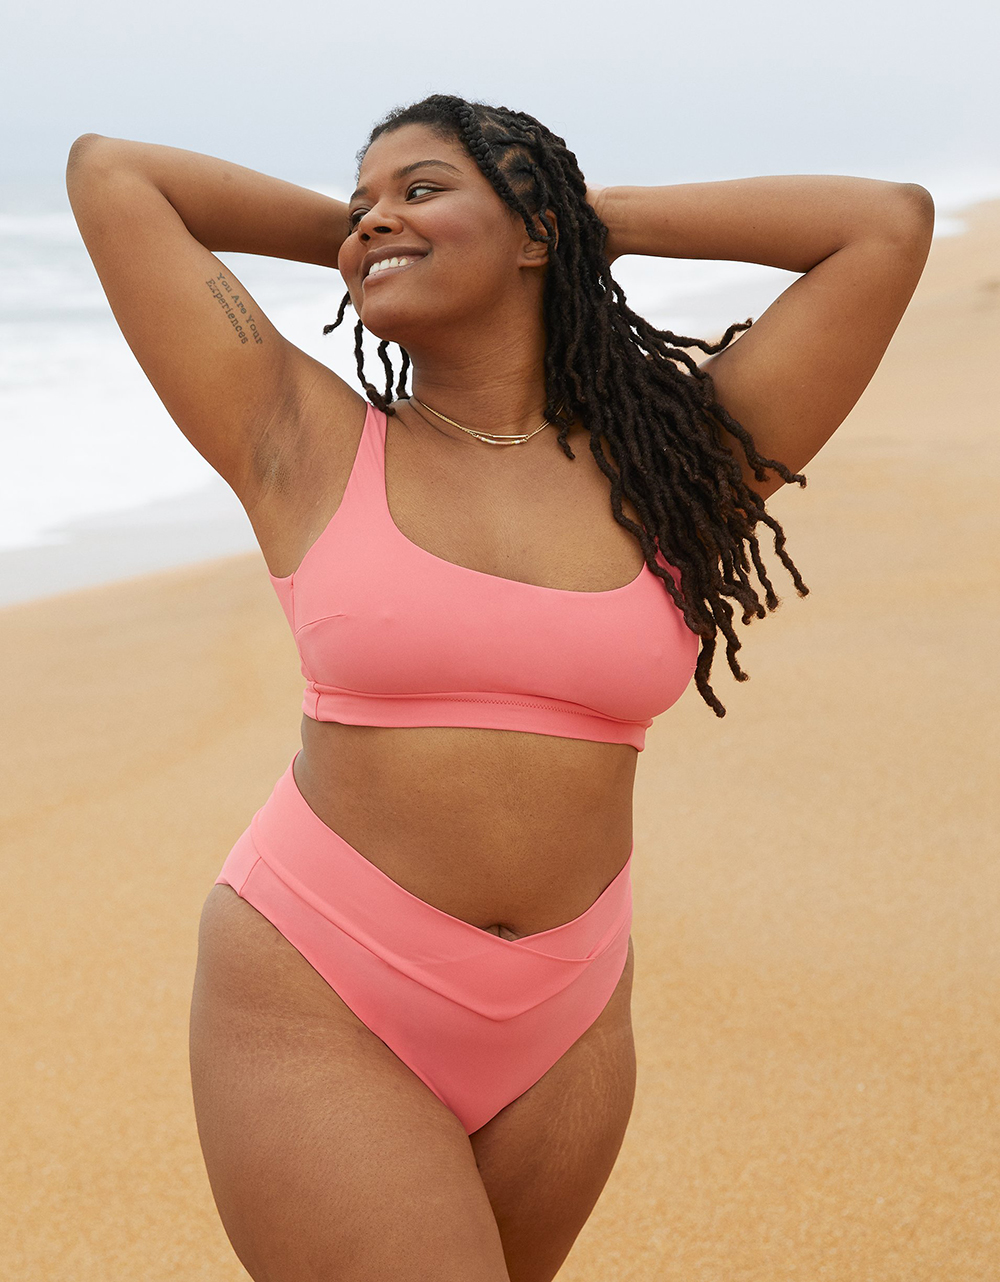 A model wearing a pink bikini from Aerie.